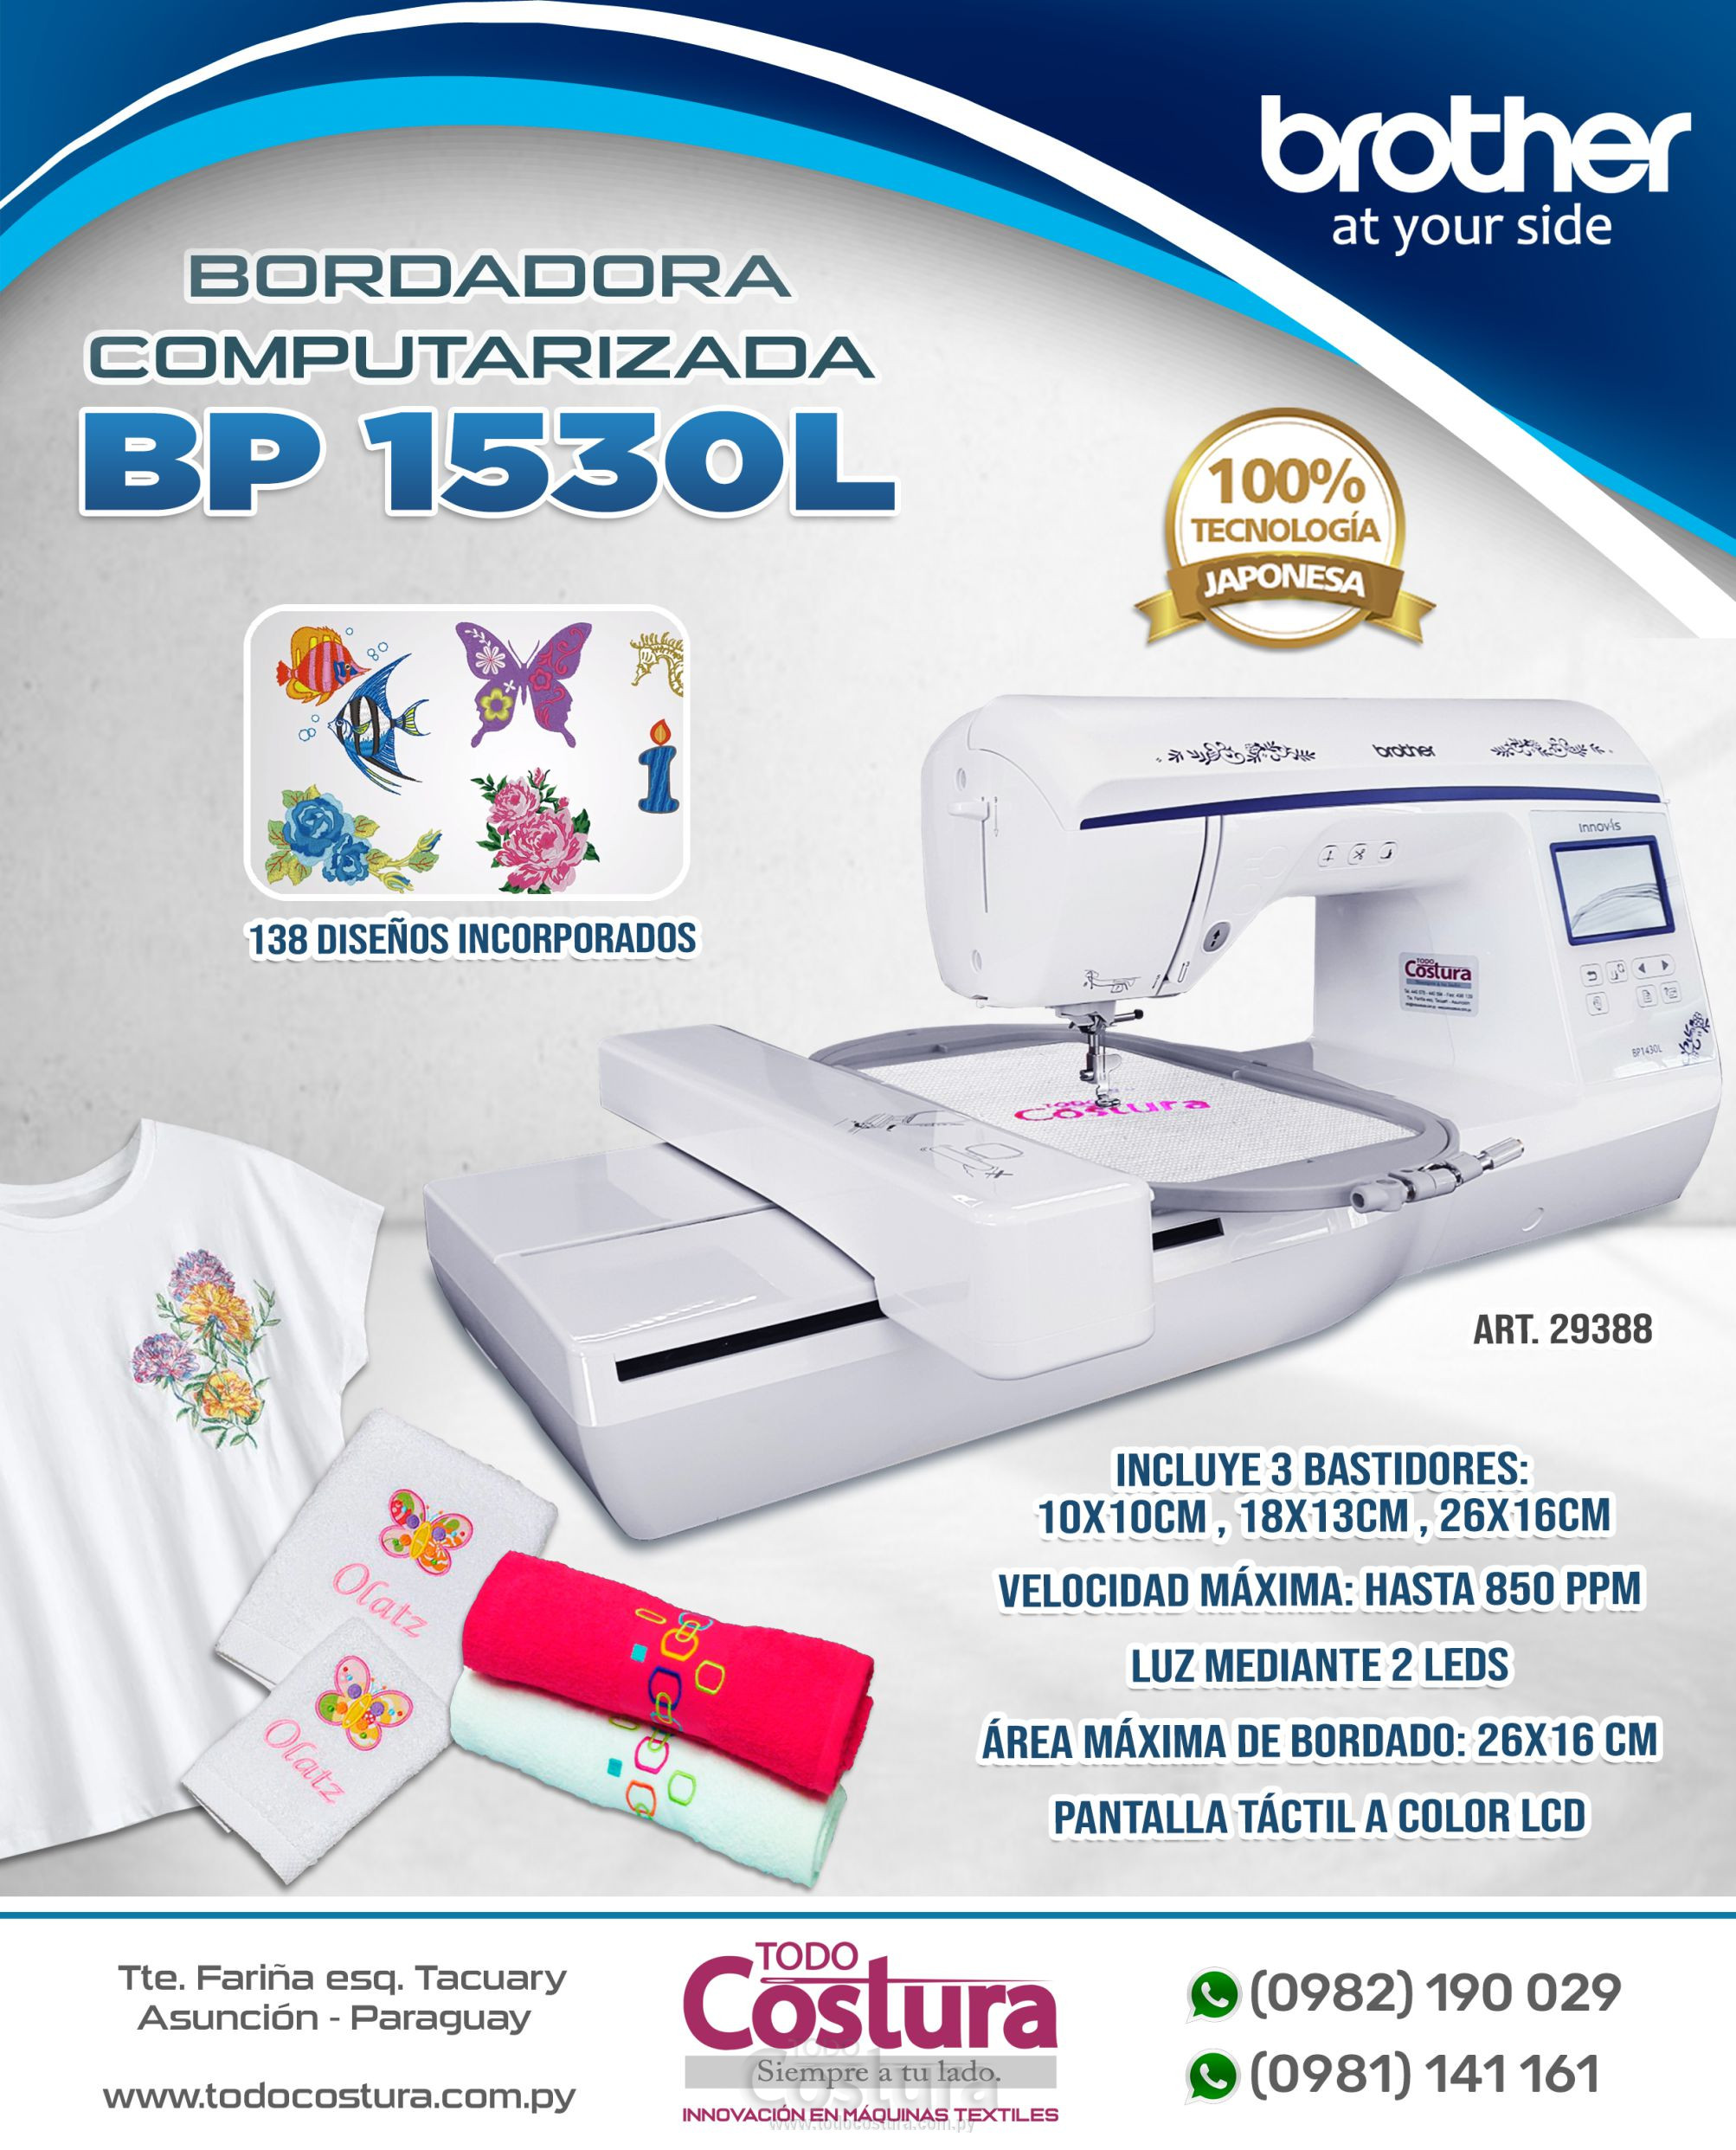 BORDADORA COMPUTARIZADA BROTHER BP1530L